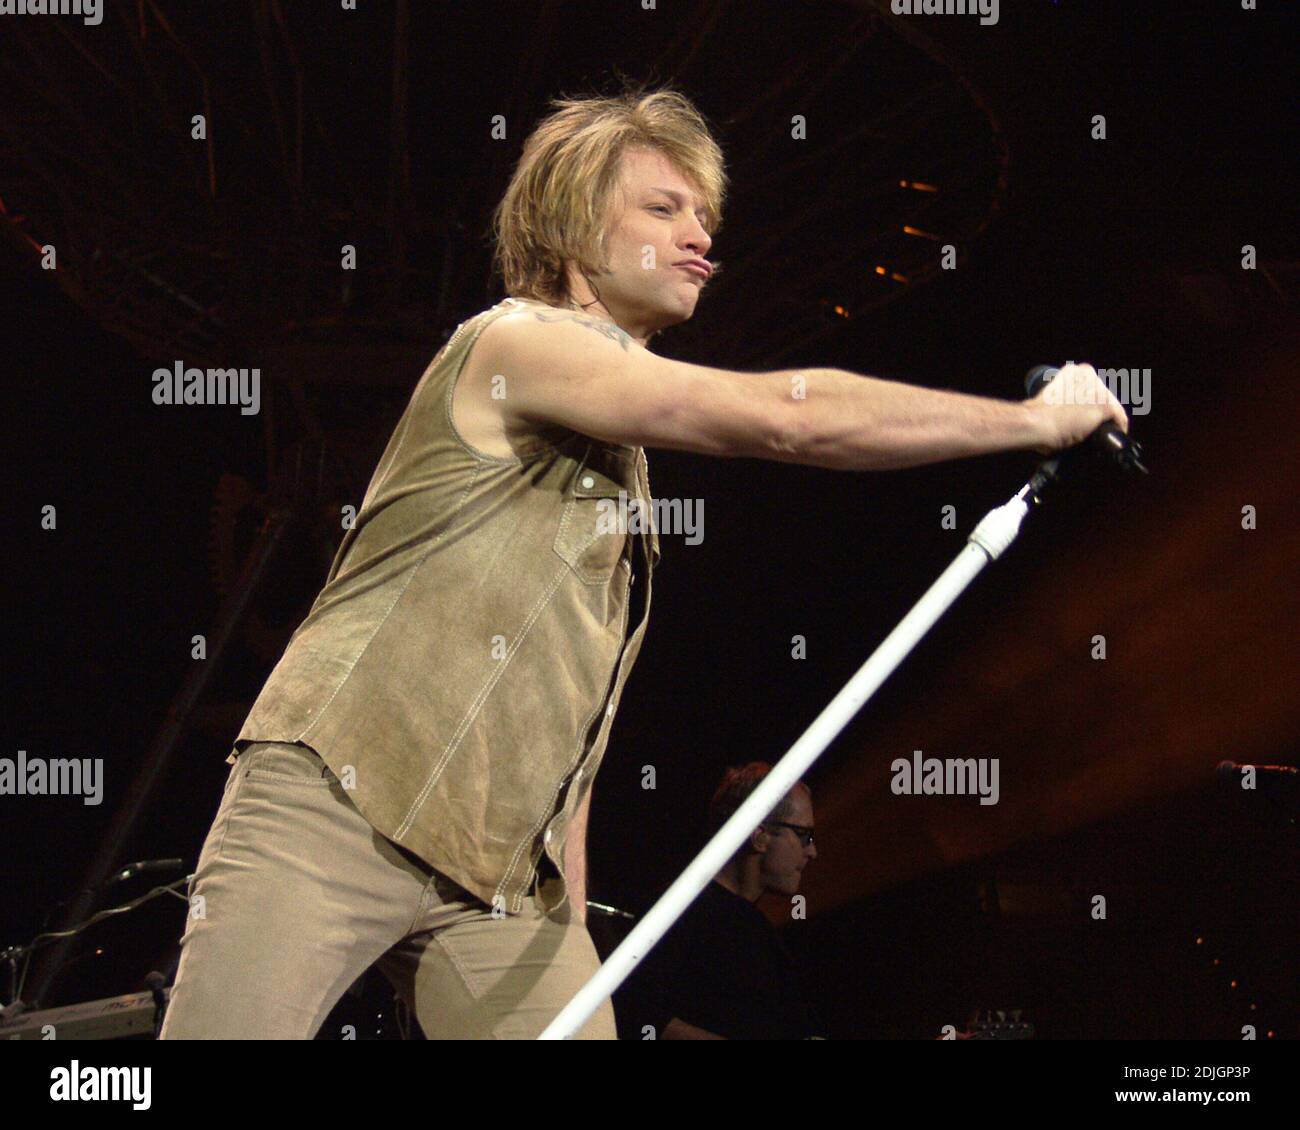 February 13: Jon Bon Jovi of Bon Jovi performs at Philips Arena in Atlanta, Georgia on February 13, 2003. CREDIT: Chris McKay / MediaPunch Stock Photo